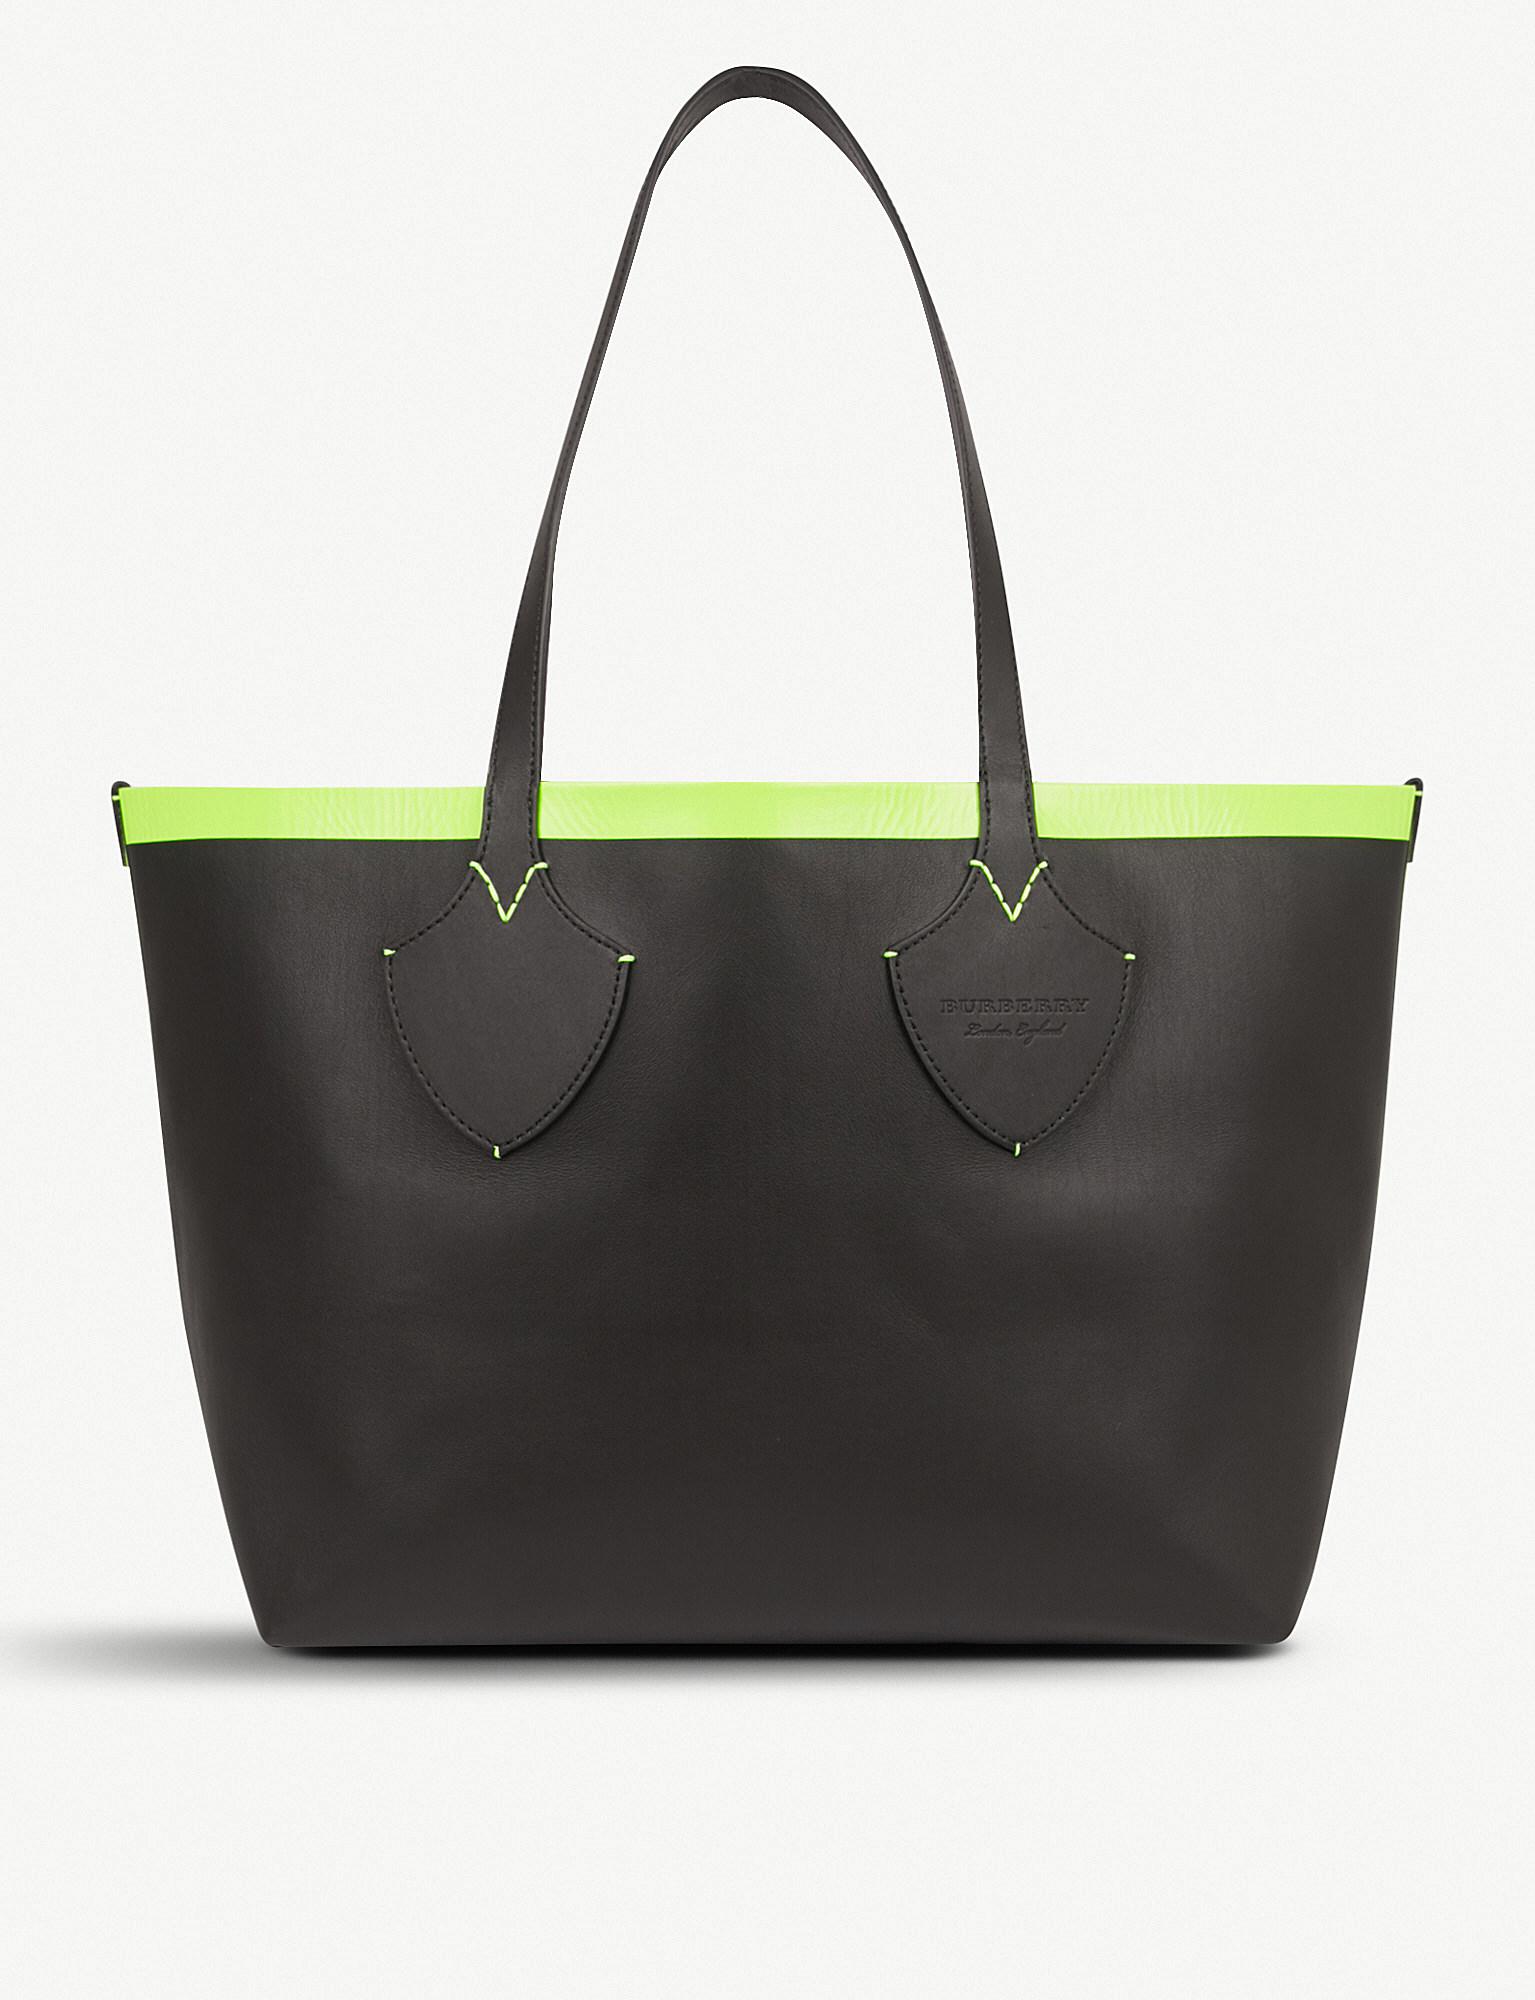 Burberry Tote Bag Price Uk | Arisia 2020 • January 17-20    